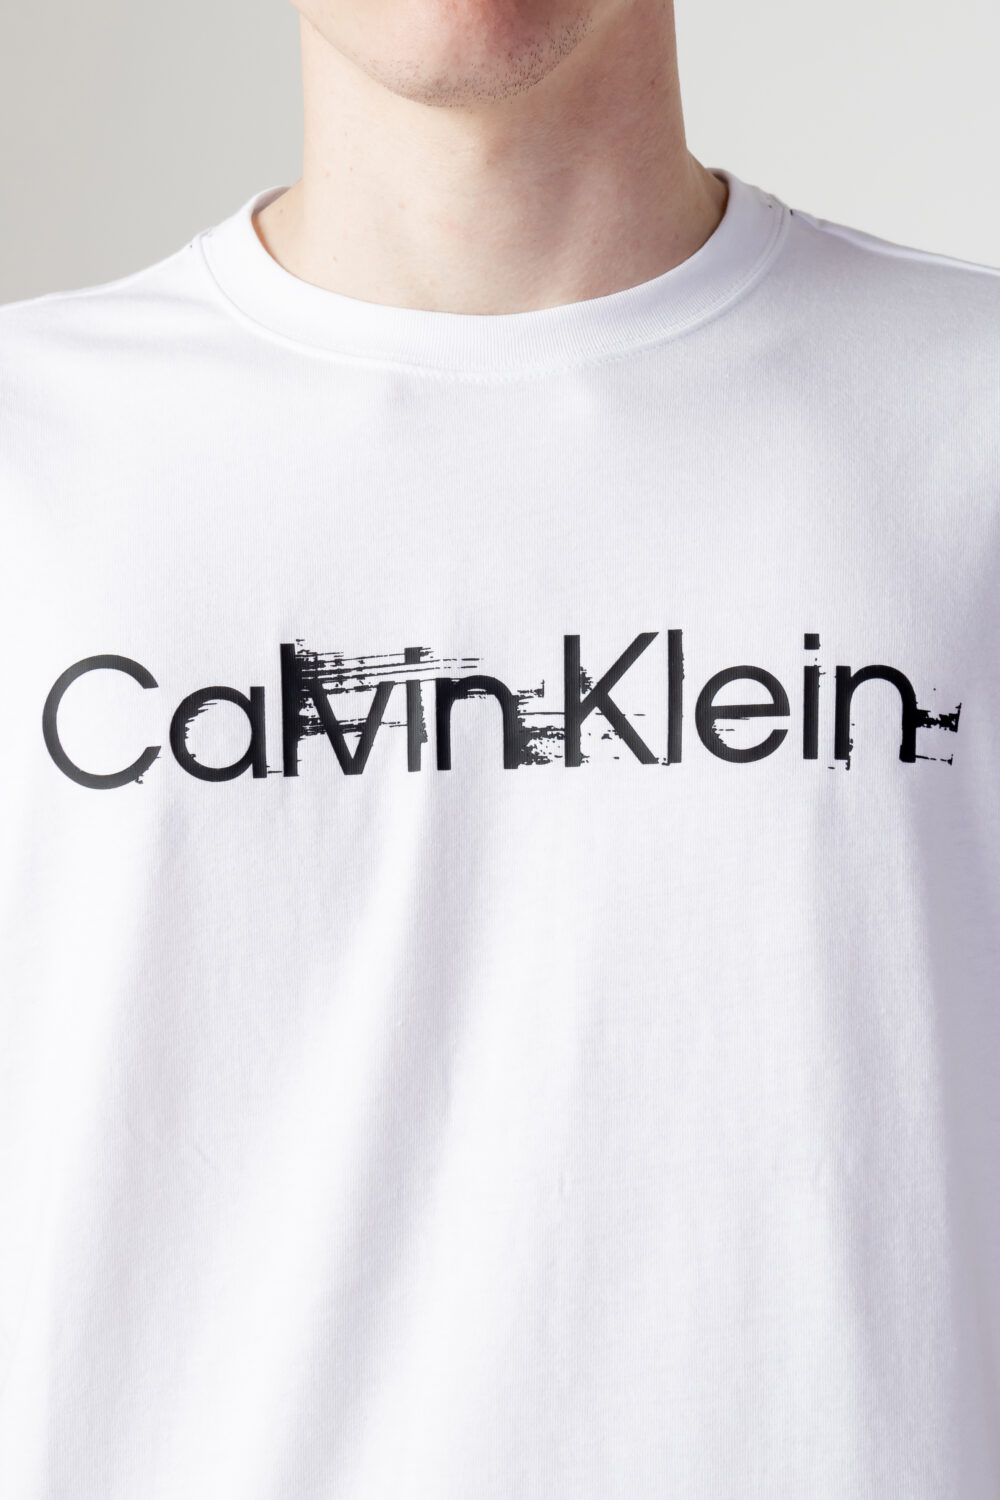 T-shirt Calvin Klein Sport PW - S/S T-Shir Bianco - Foto 2